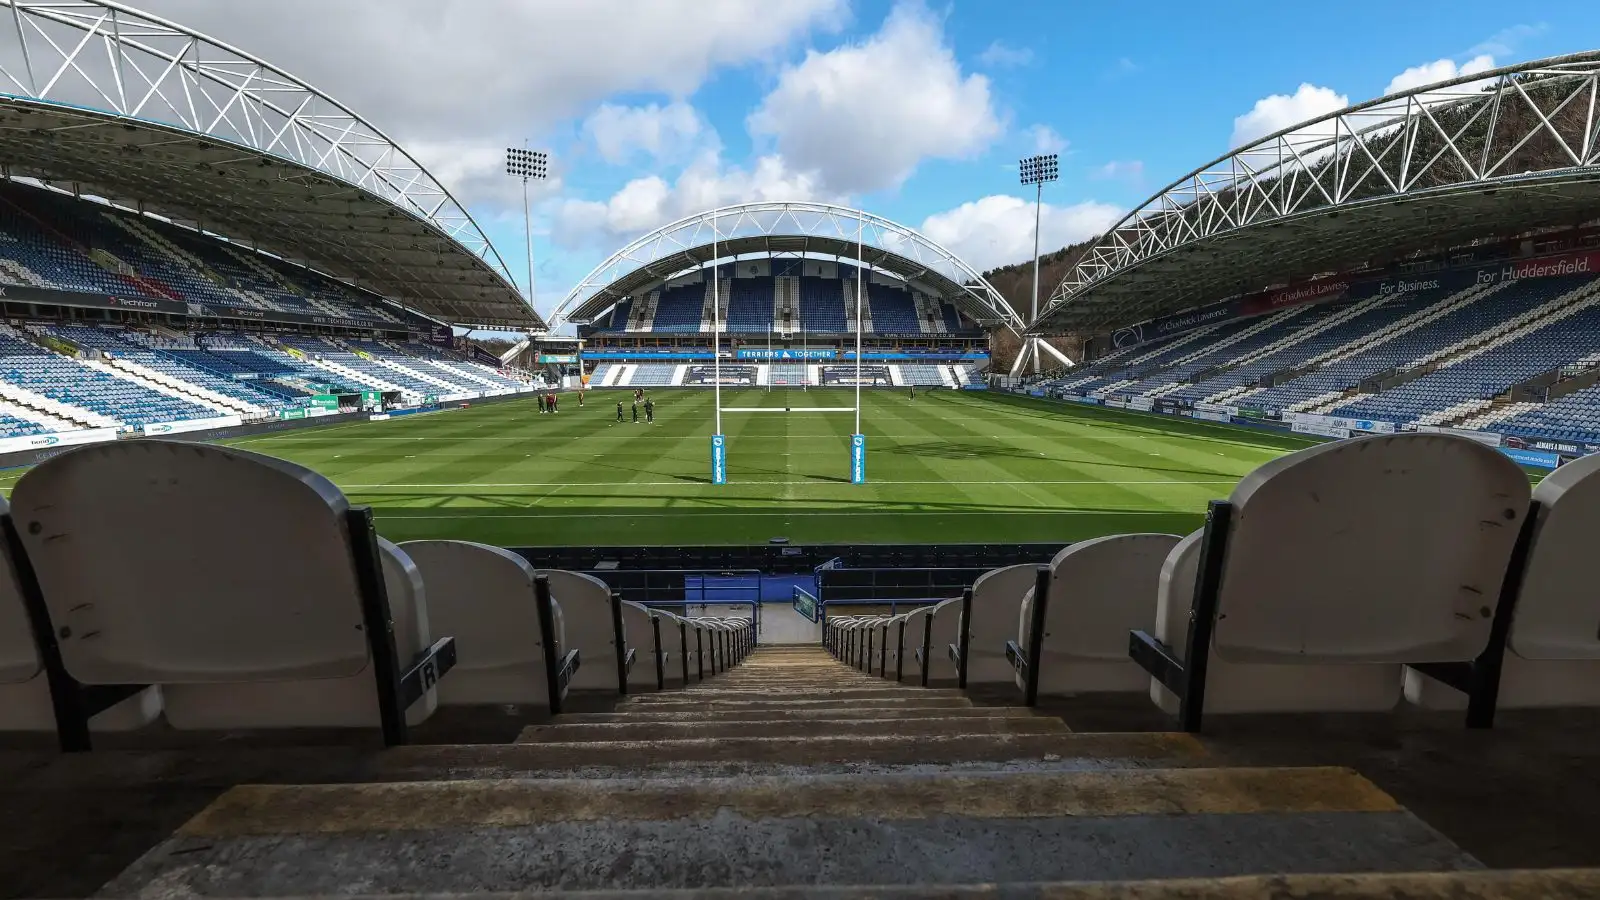 The John Smith's Stadium, Huddersfield